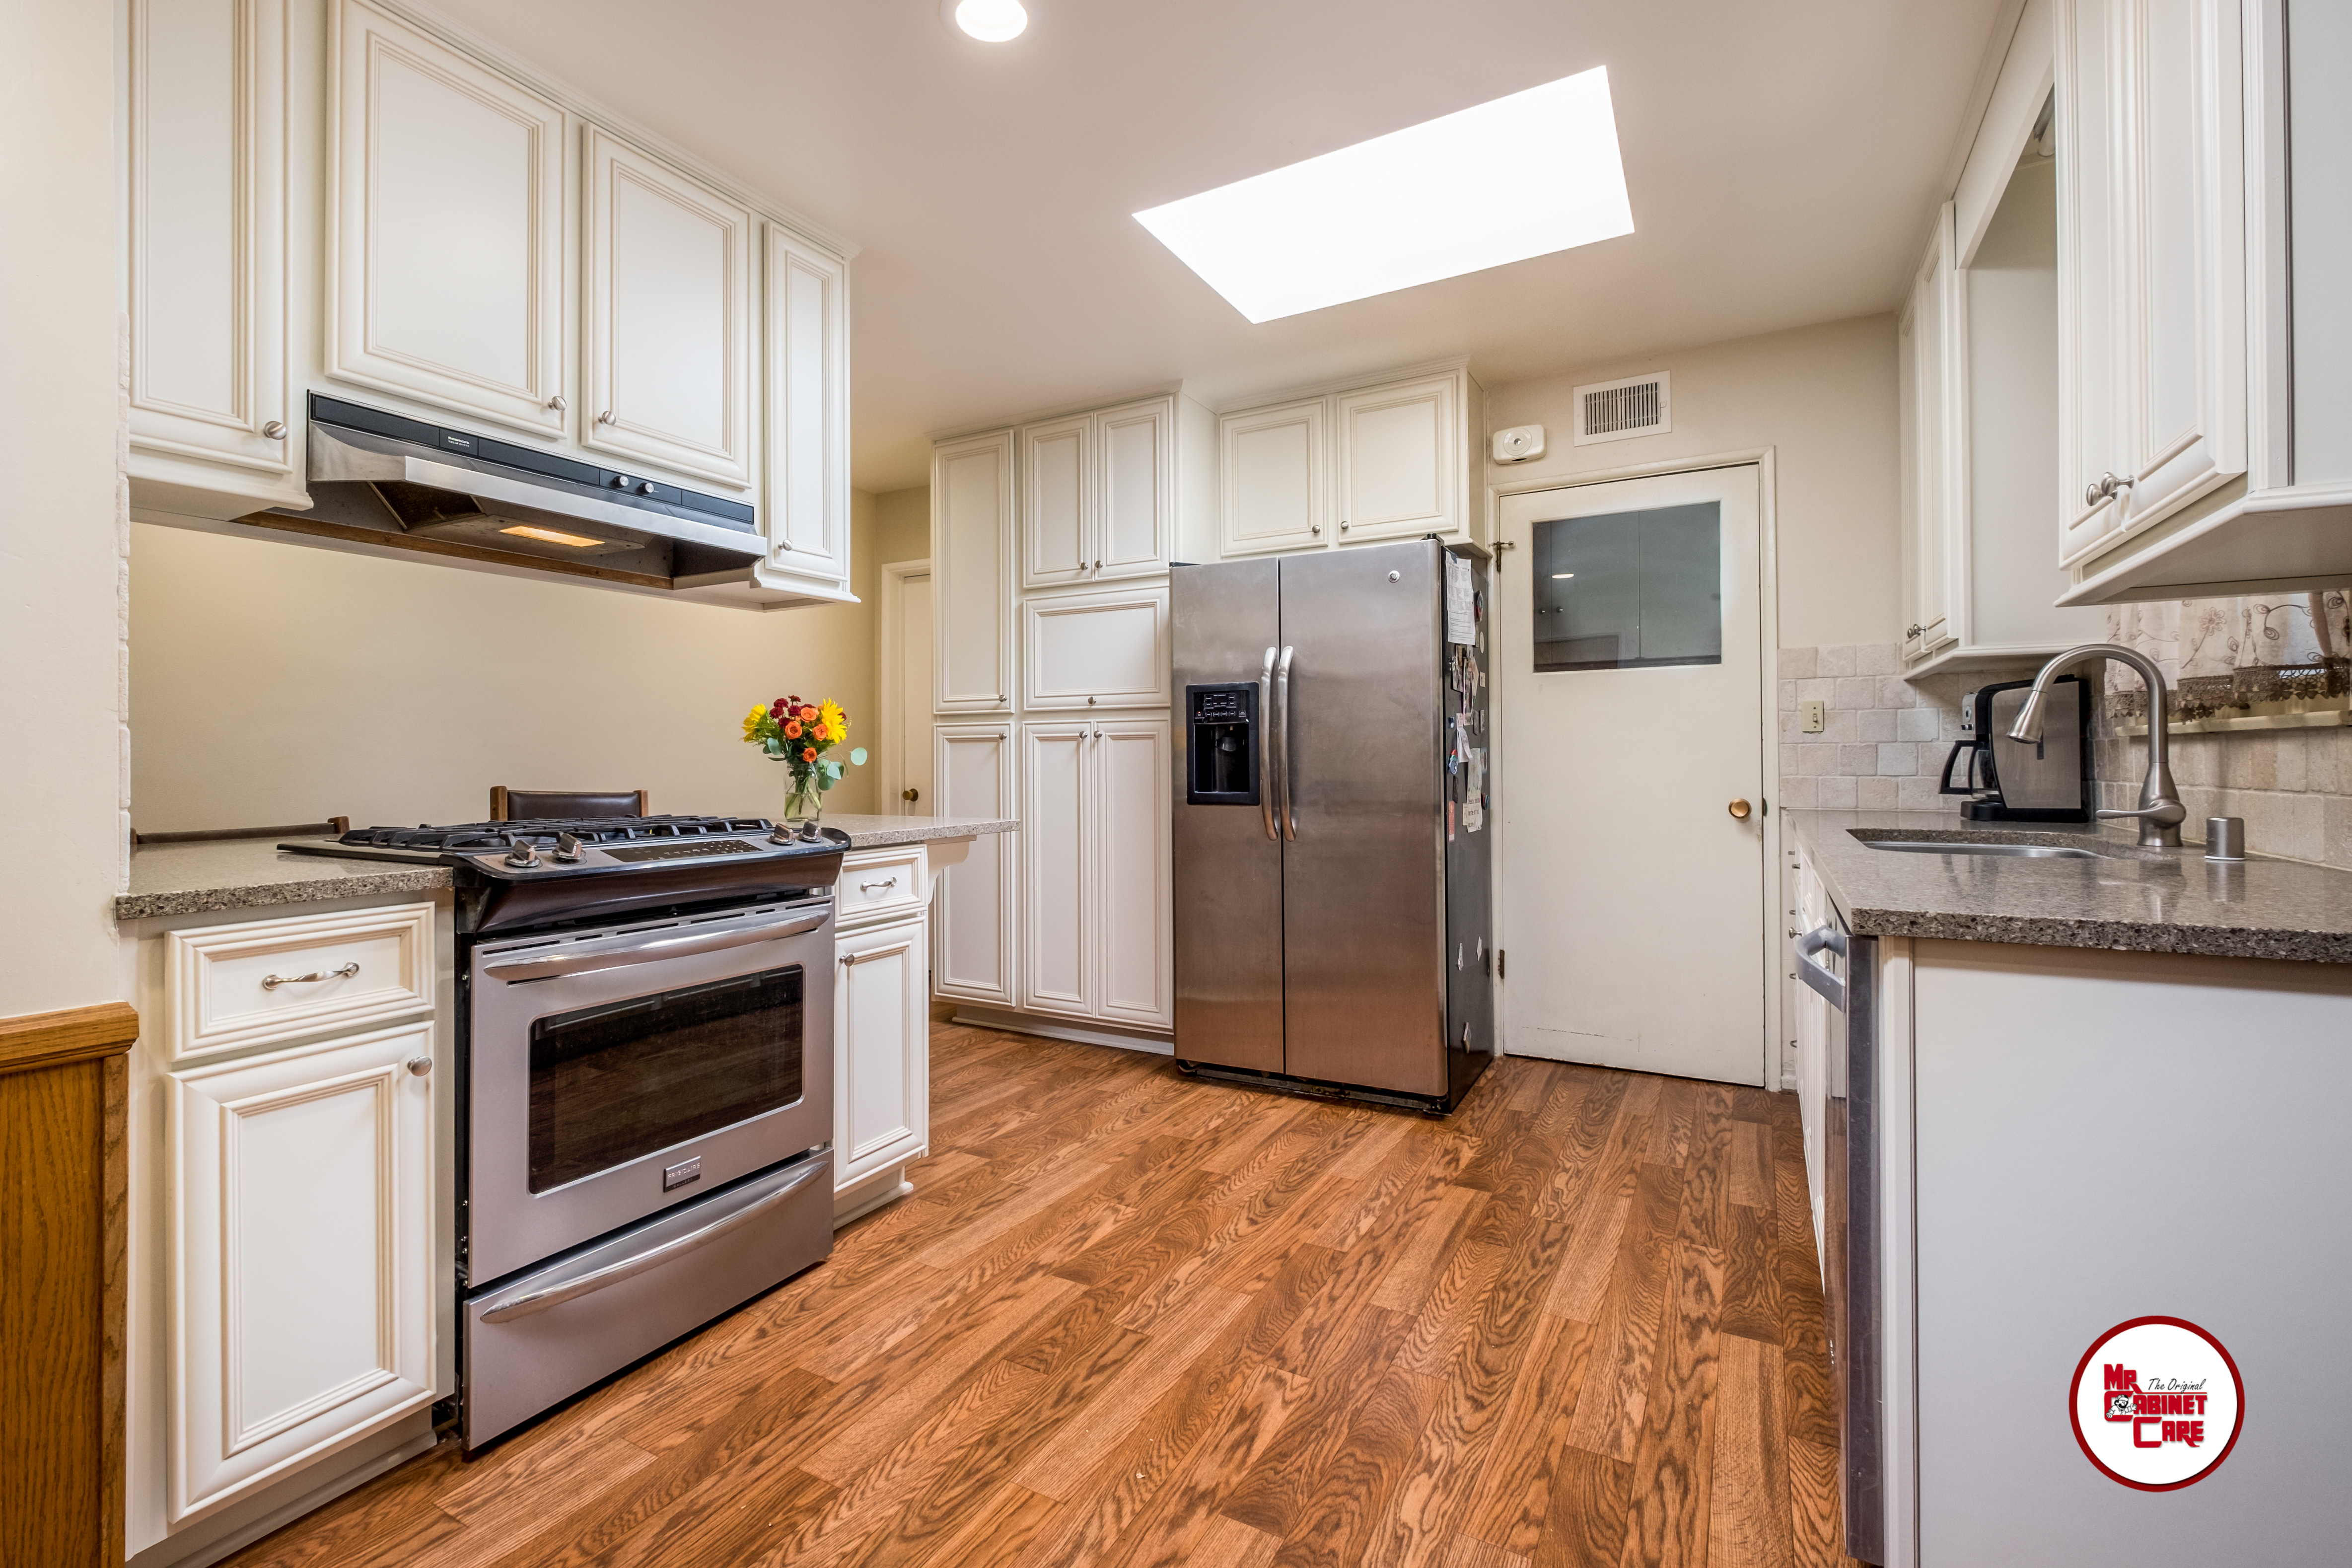 Kitchen Flooring Options to Consider